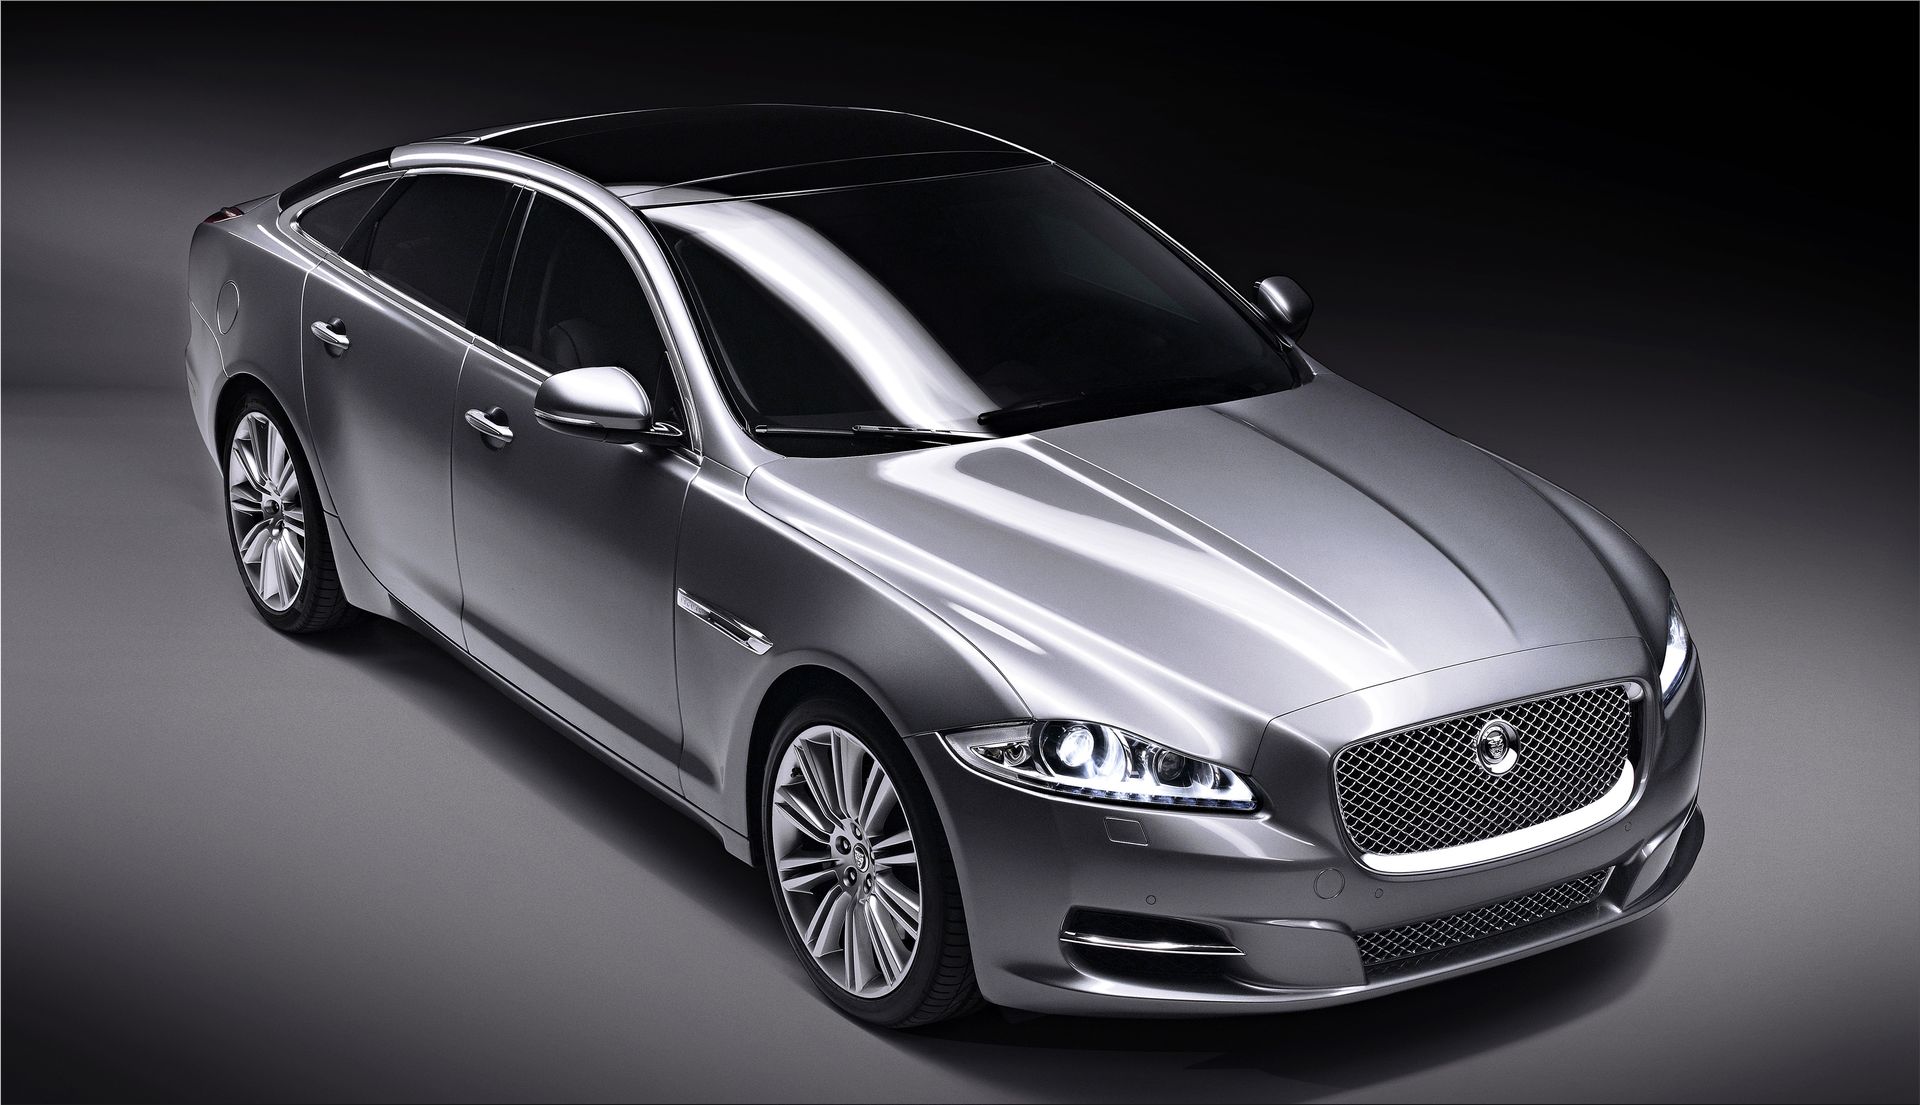 Jaguar XJ - the most reliable luxury sedan|Jaguar